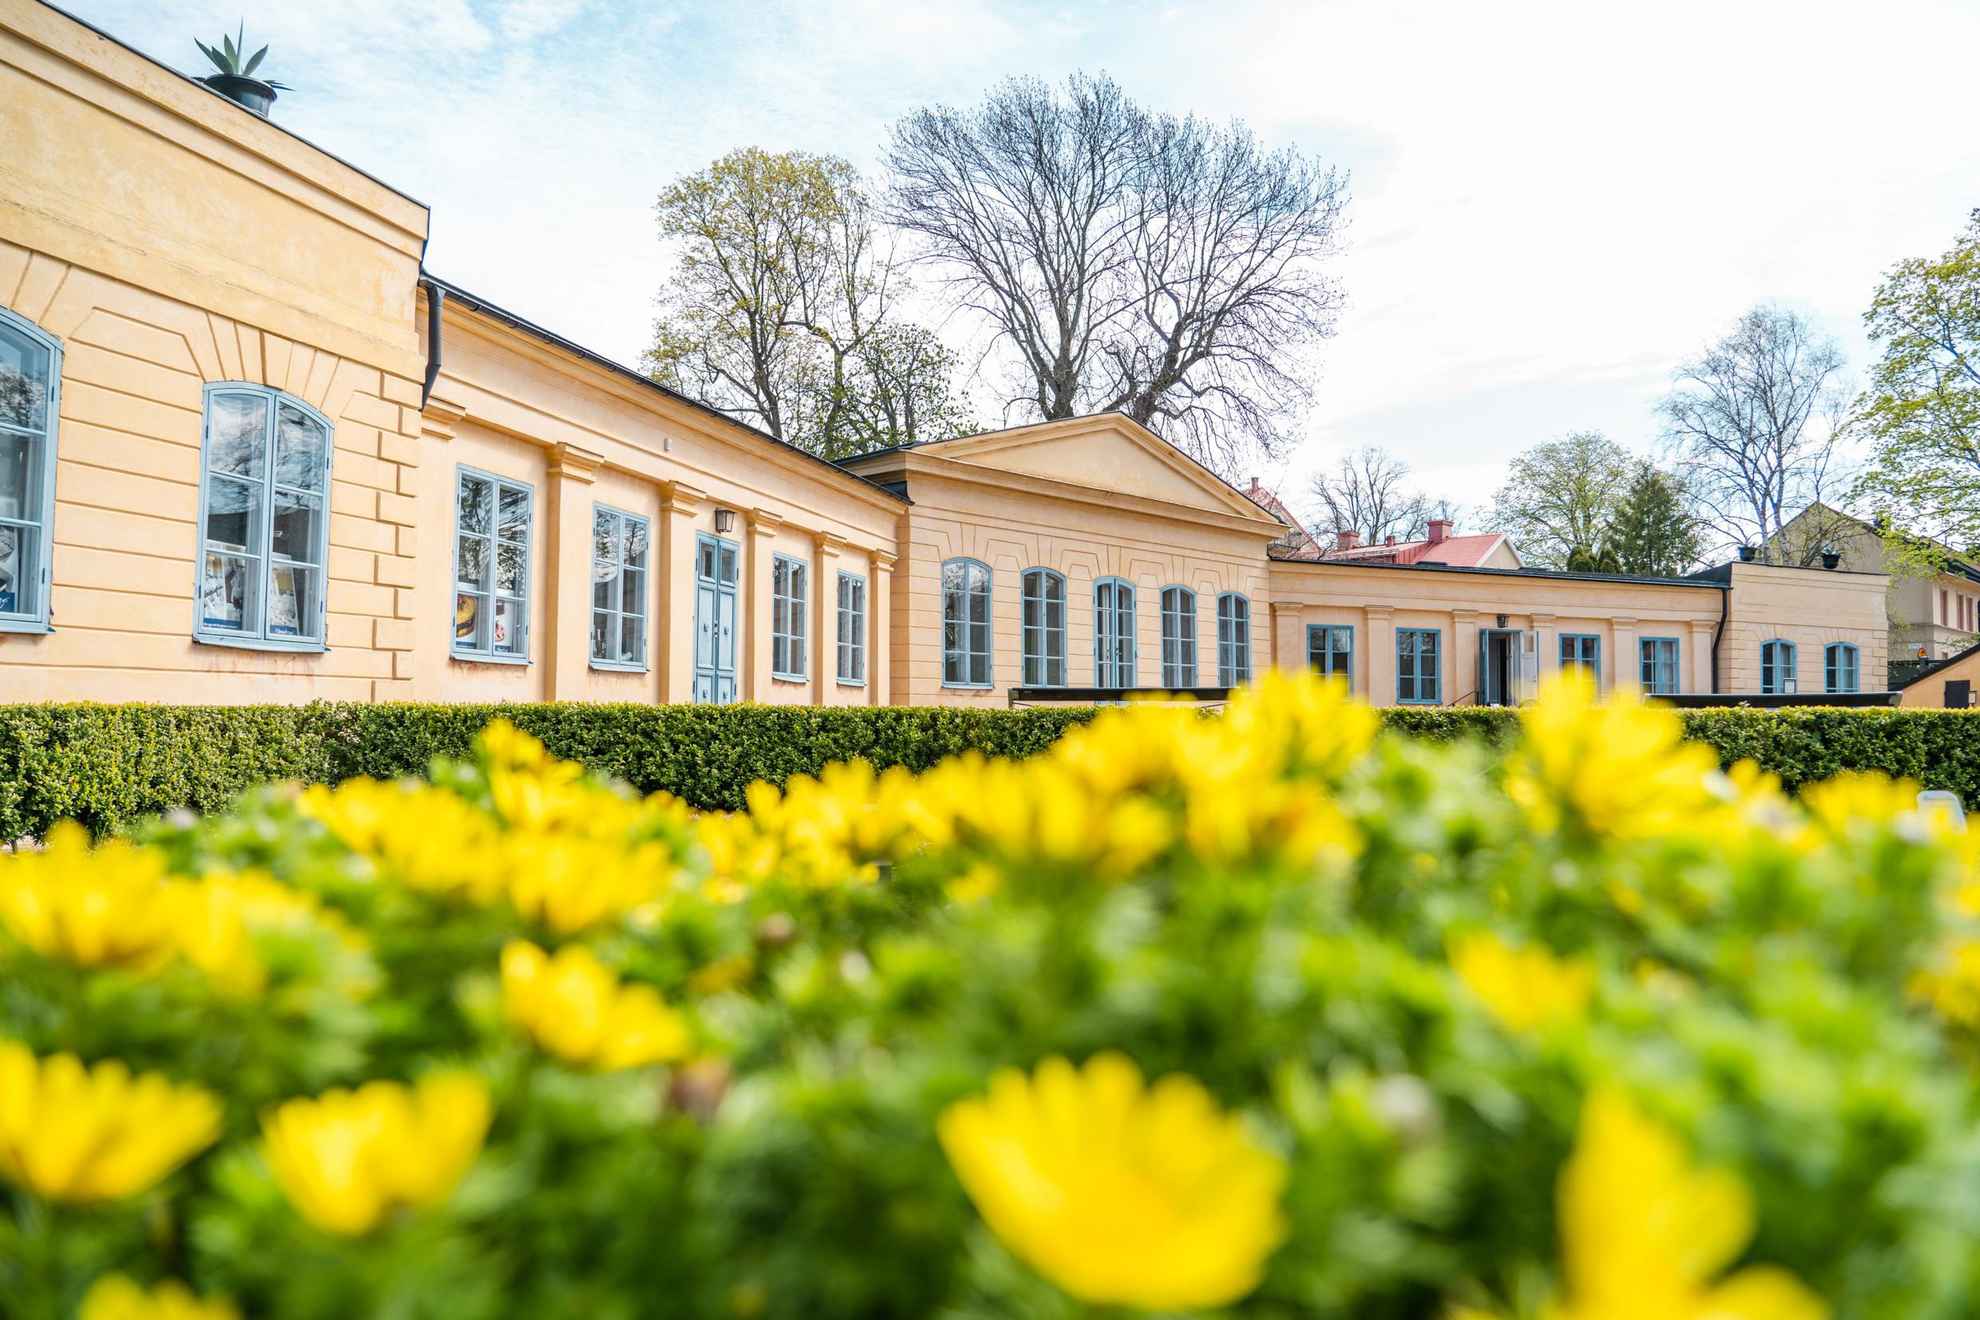 The Linnaeus Garden in Uppsala